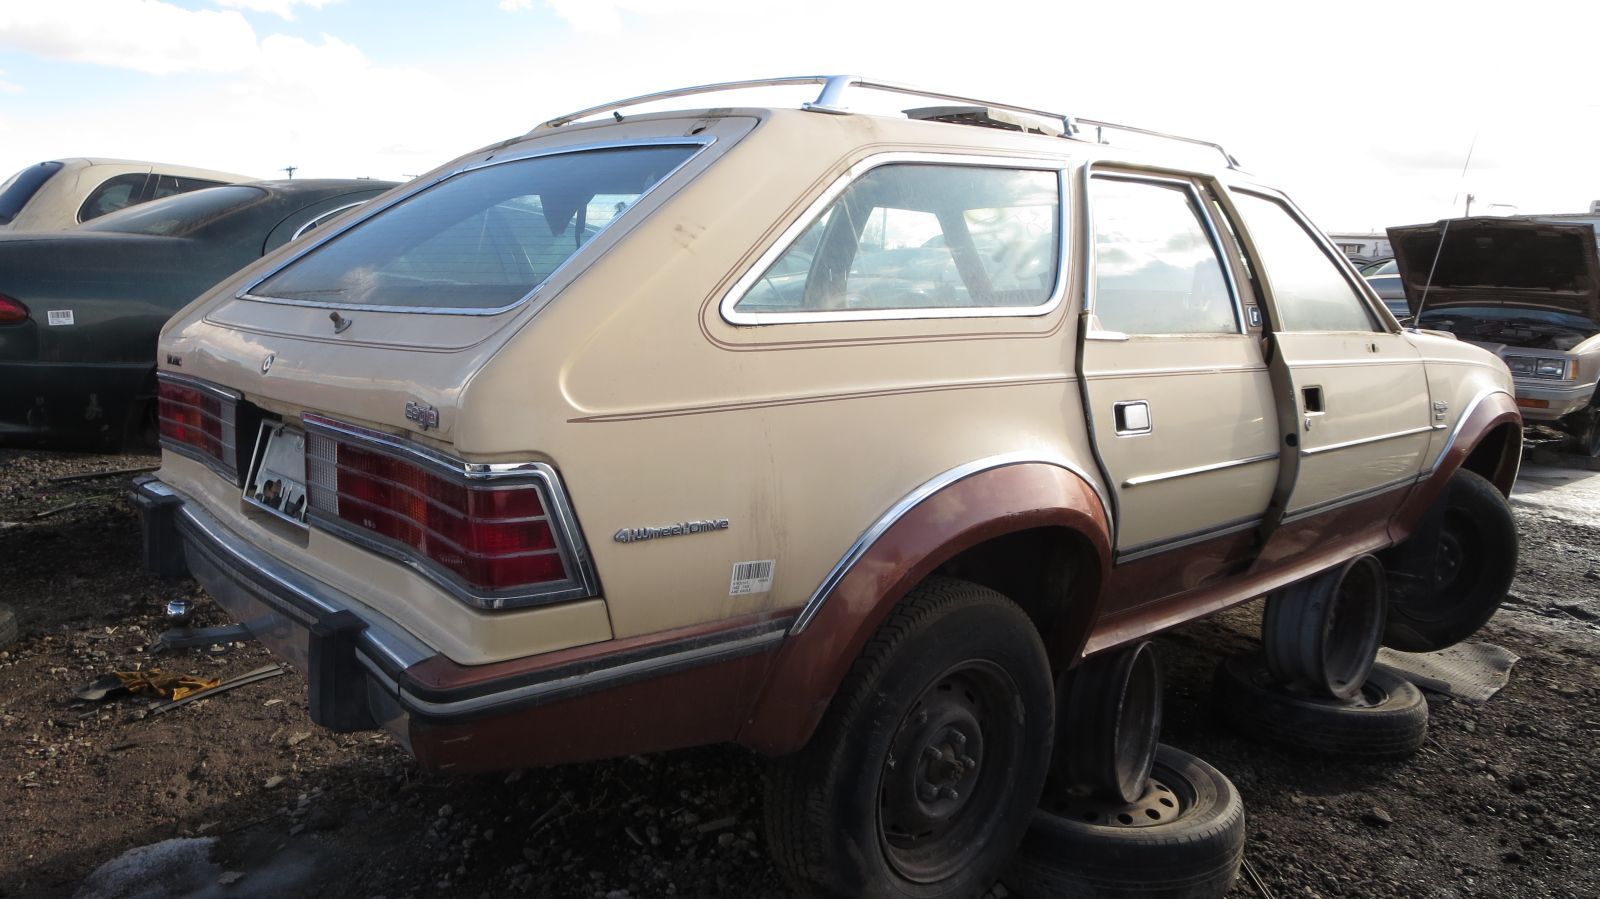 09 - 1982 AMC Eagle wagon in Colorado junkyard - photo by Murilee Martin